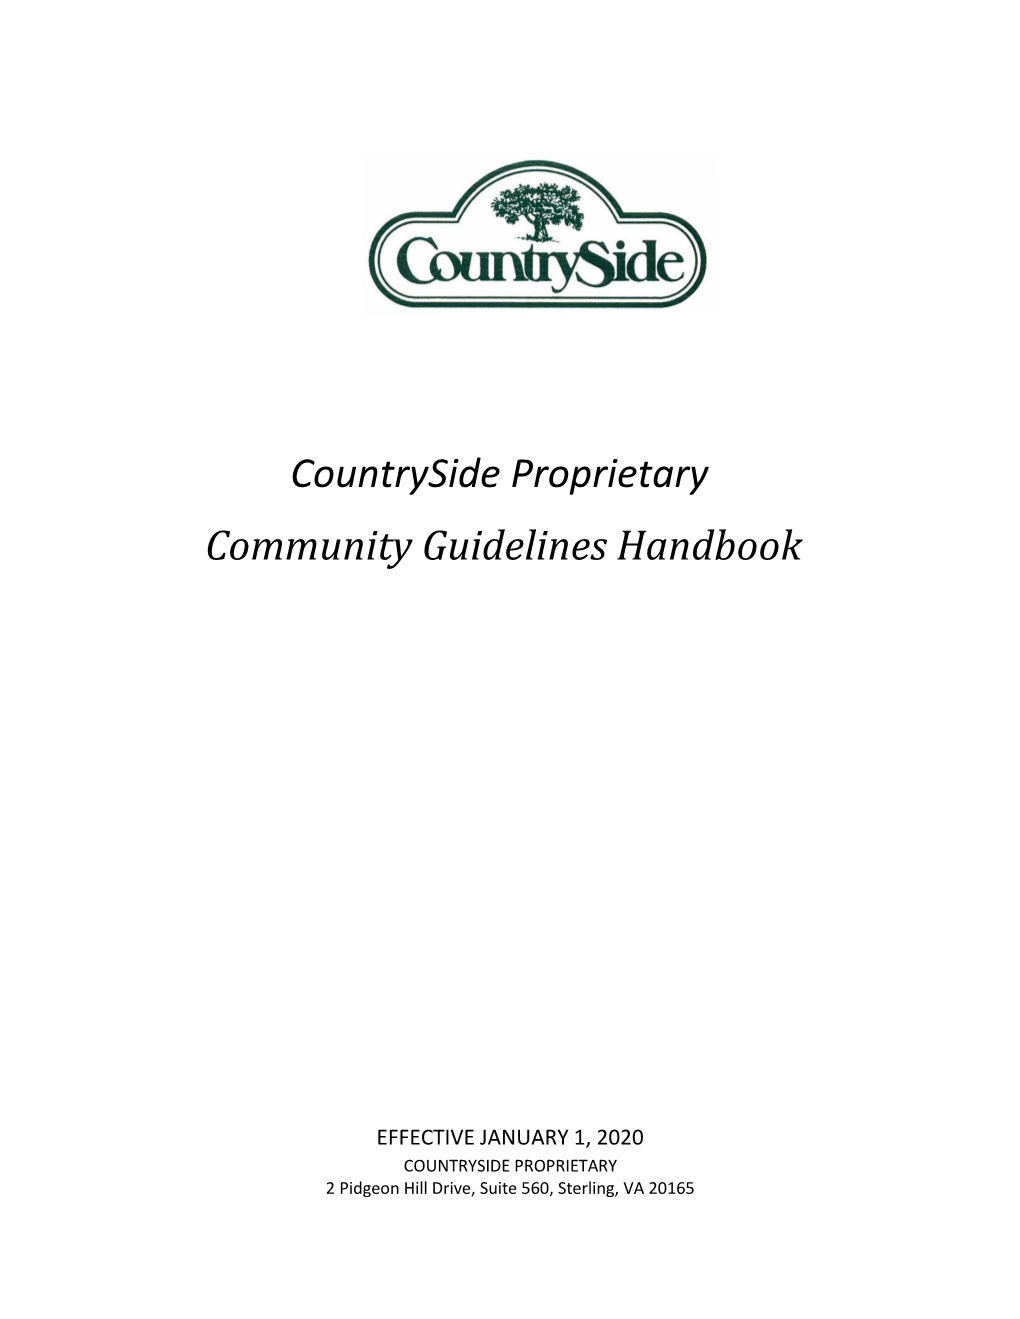 Countryside Proprietary Community Guidelines Handbook